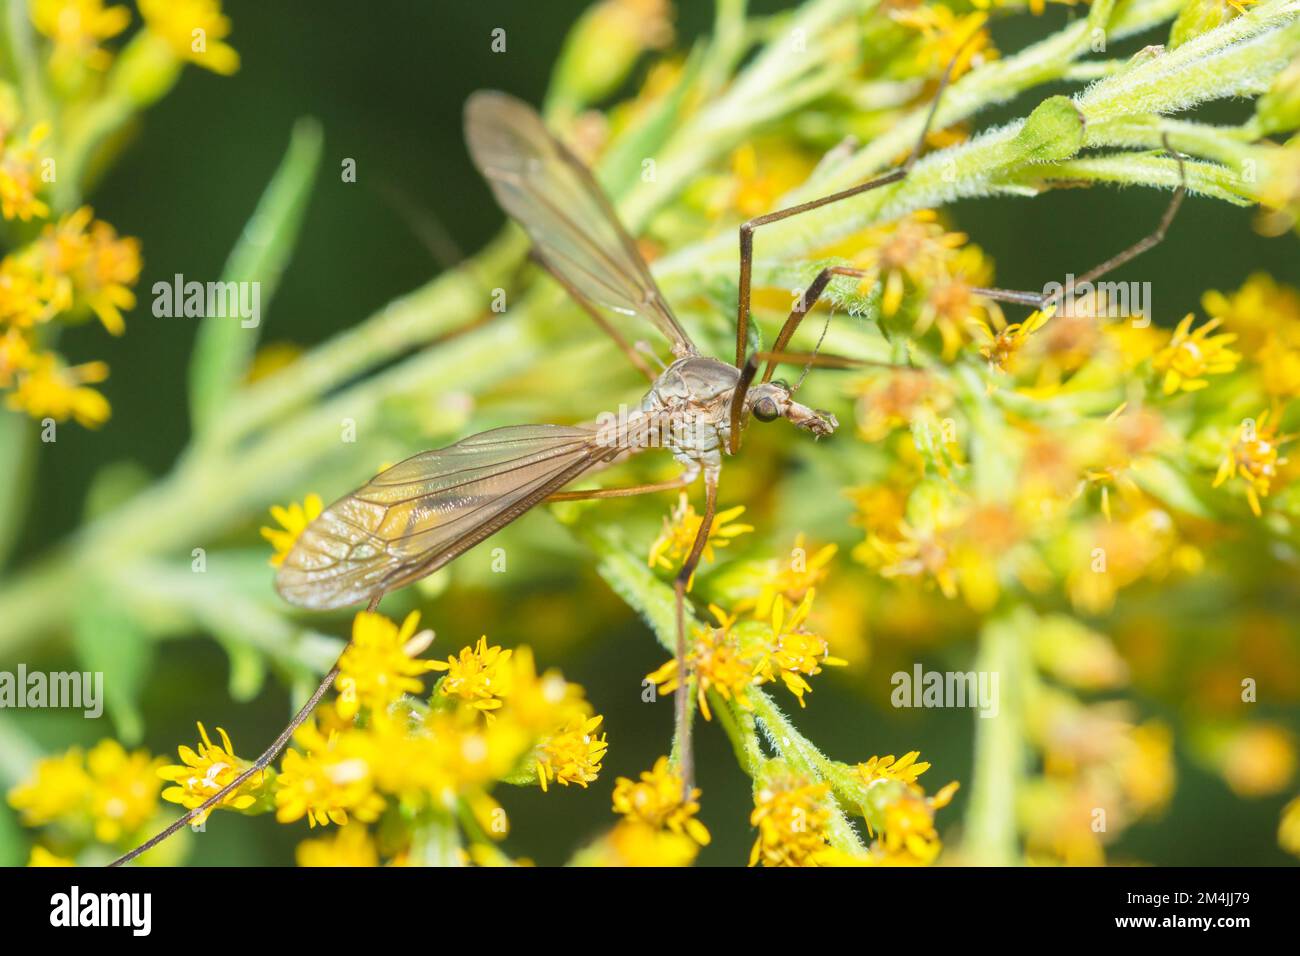 European Crane Fly (Tipula Paludosa) on Canada Goldenrod (Solidago Canadensis) Stock Photo